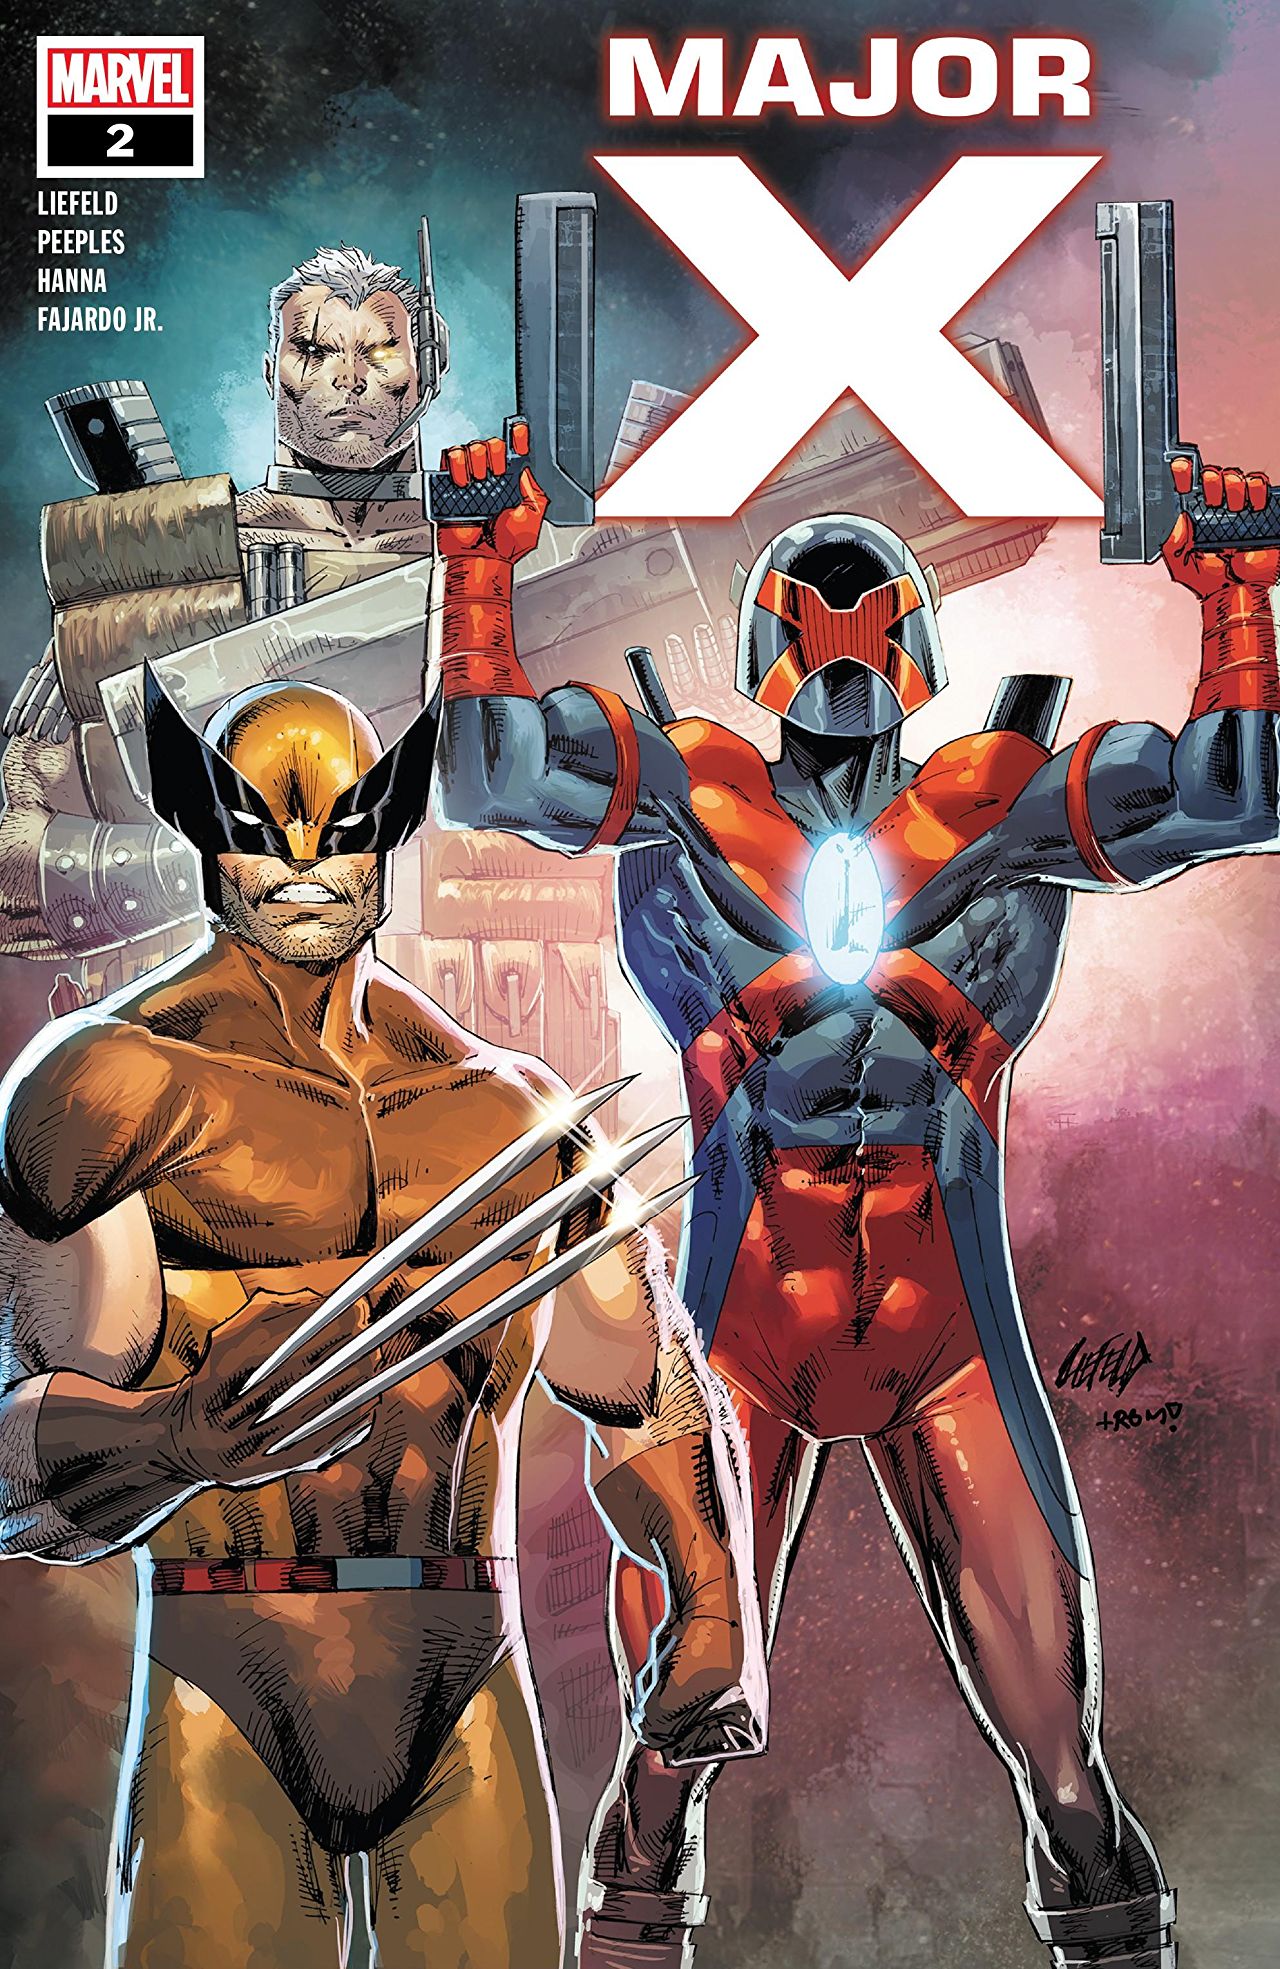 Marvel Preview: Major X #2